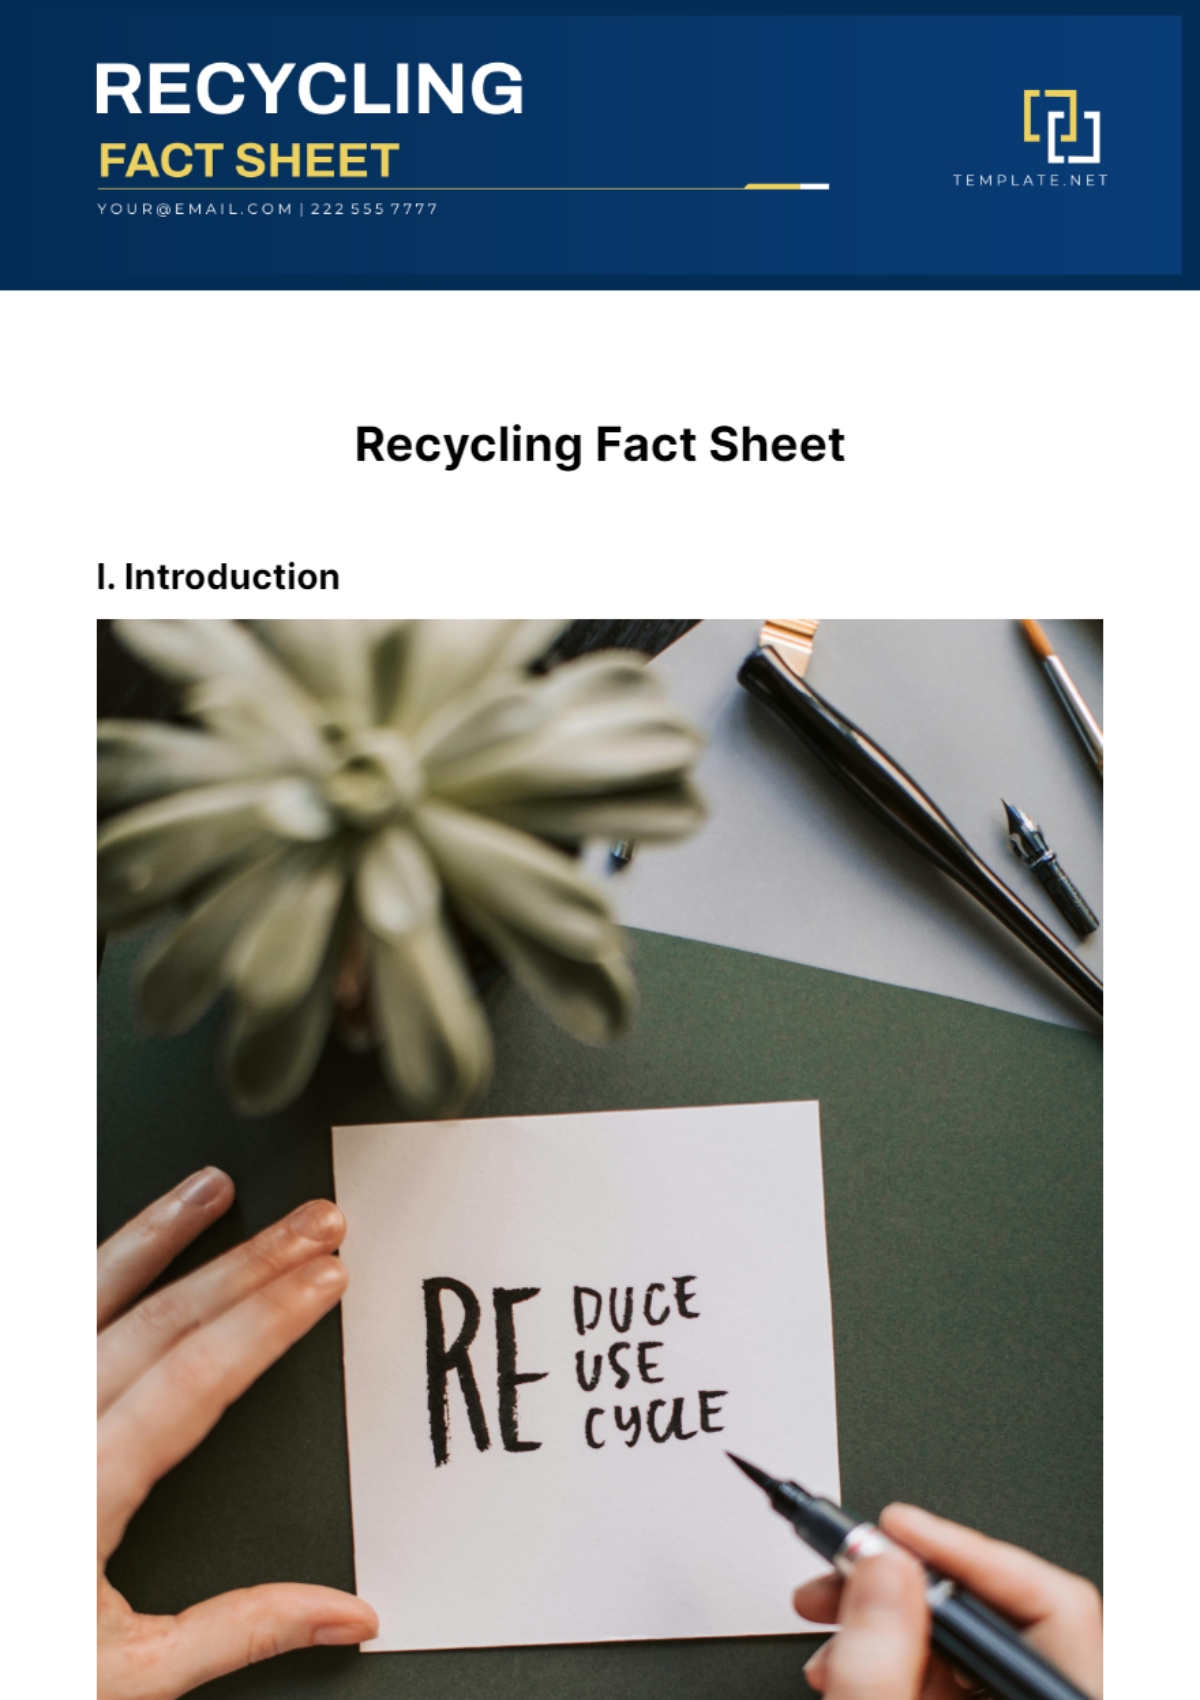 Recycling Fact Sheet Template